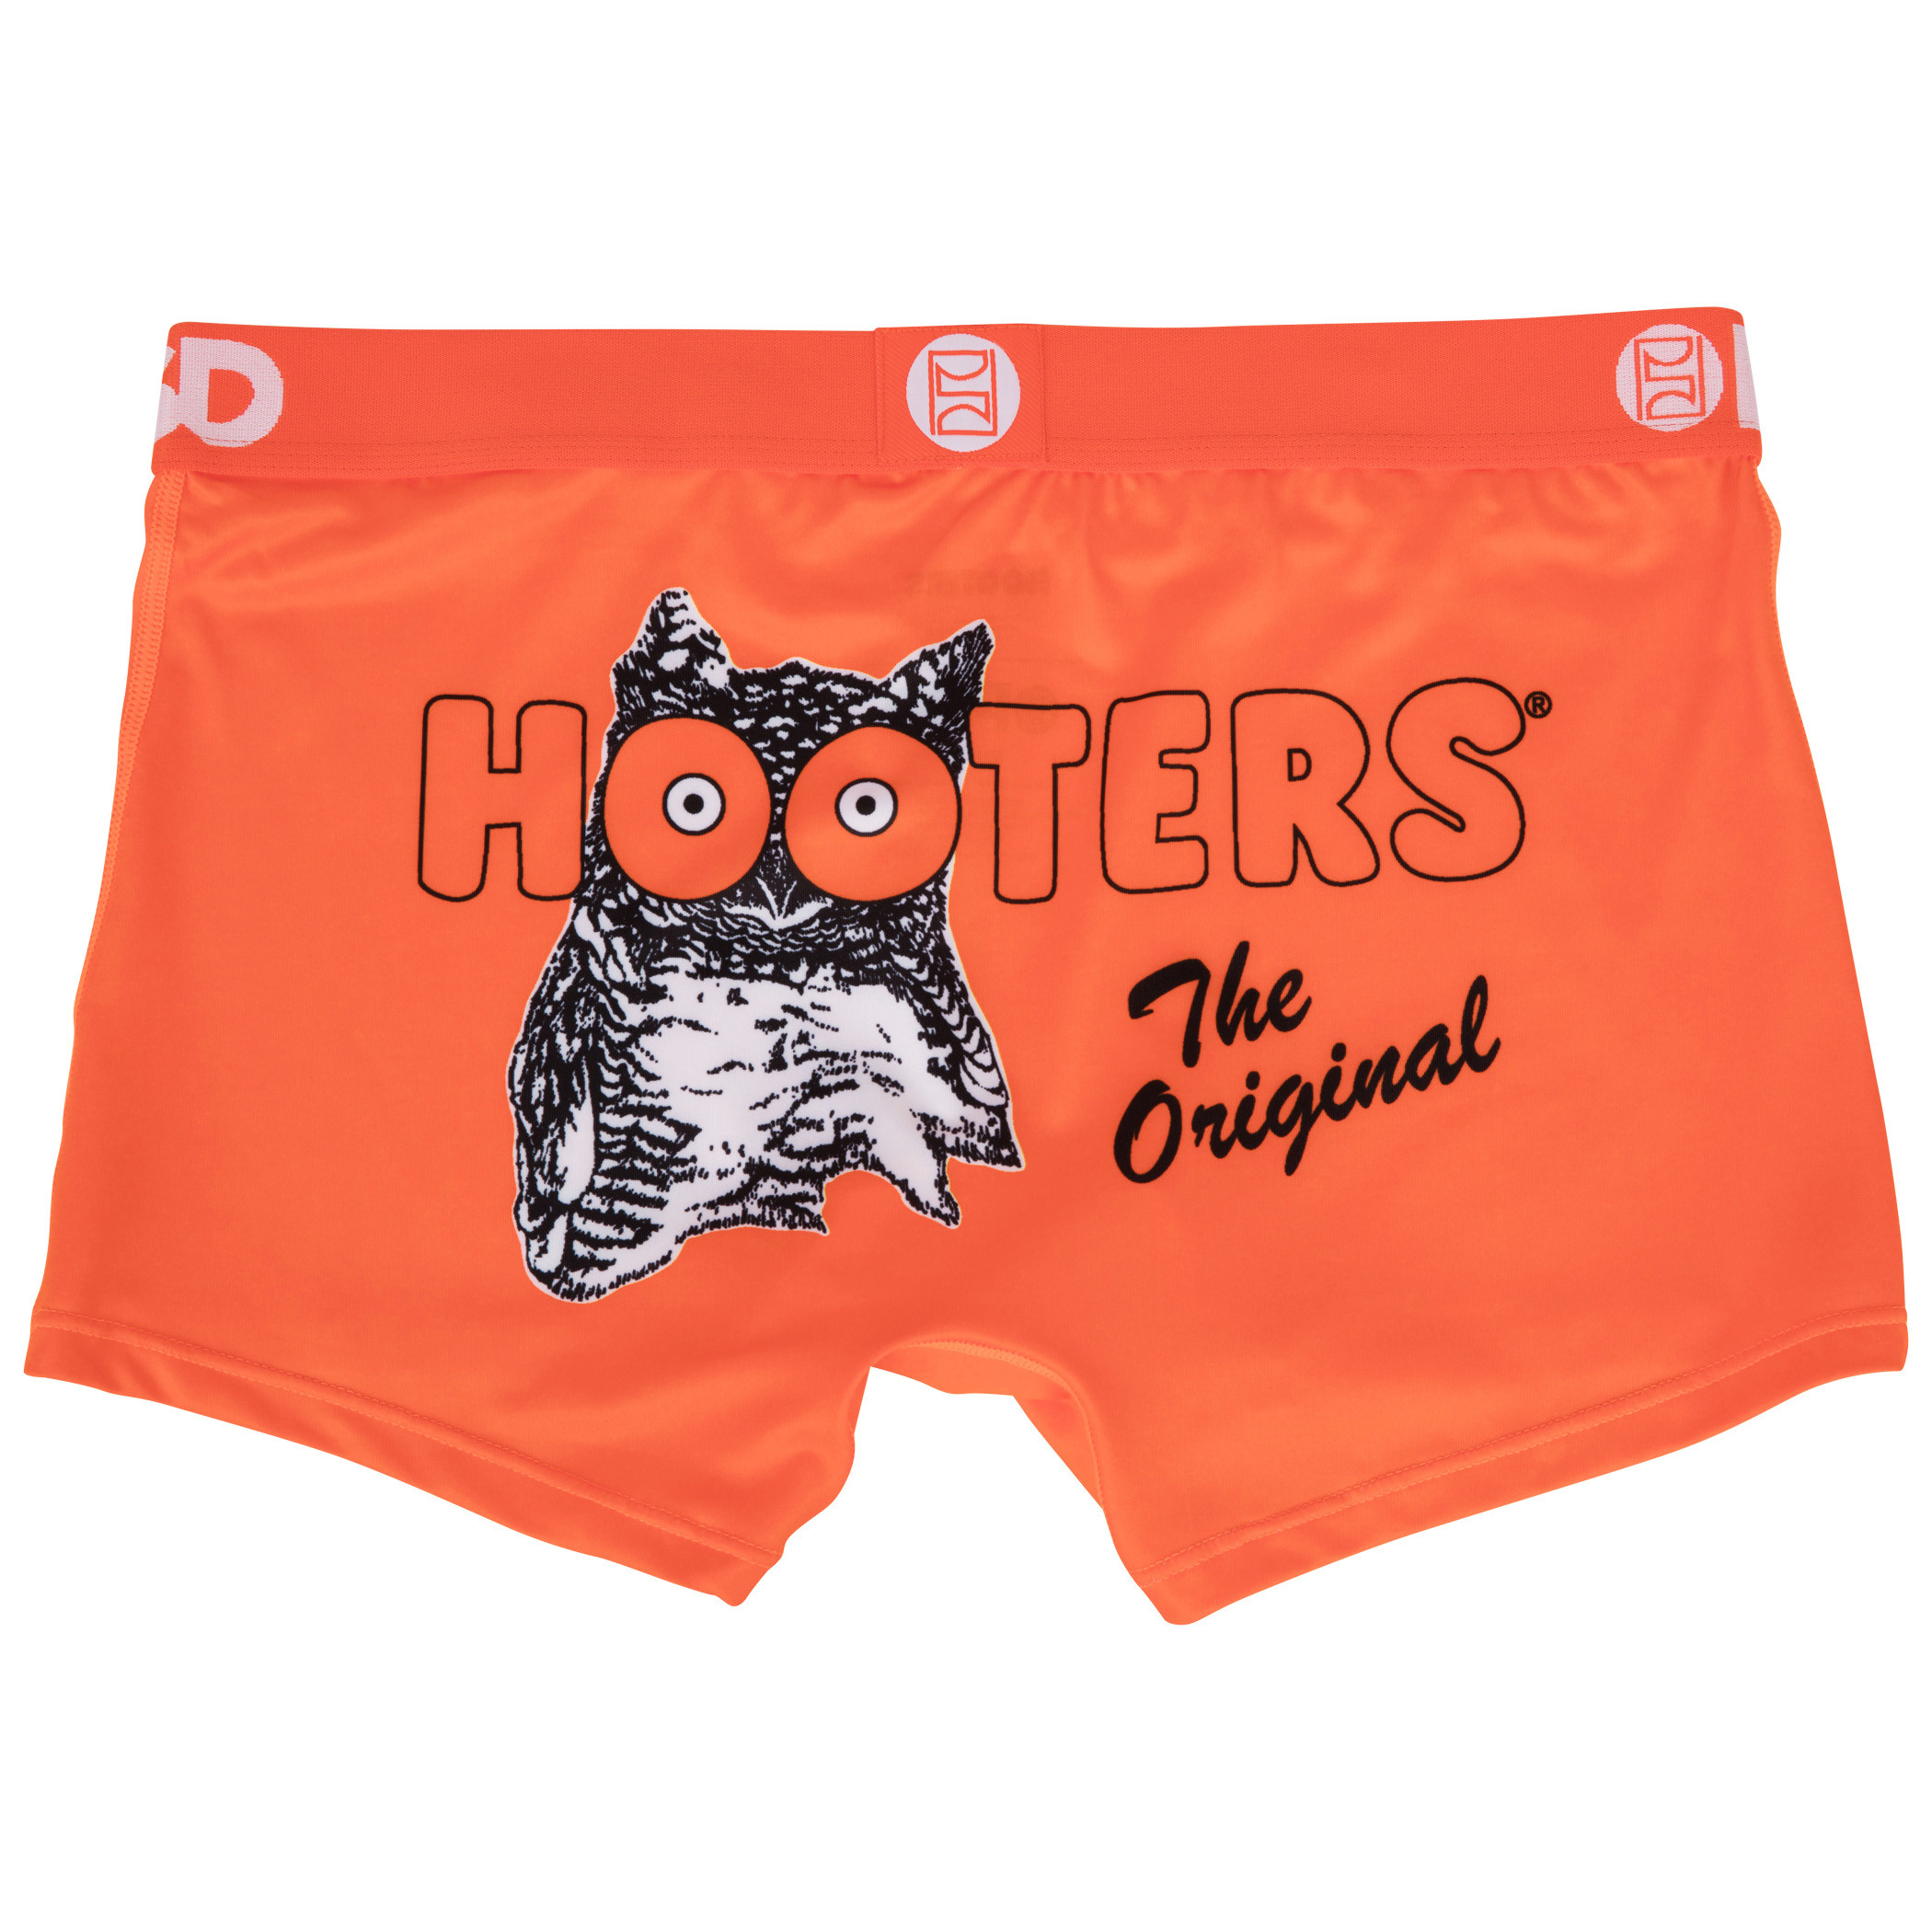 Hooters - The Original, Boy Short